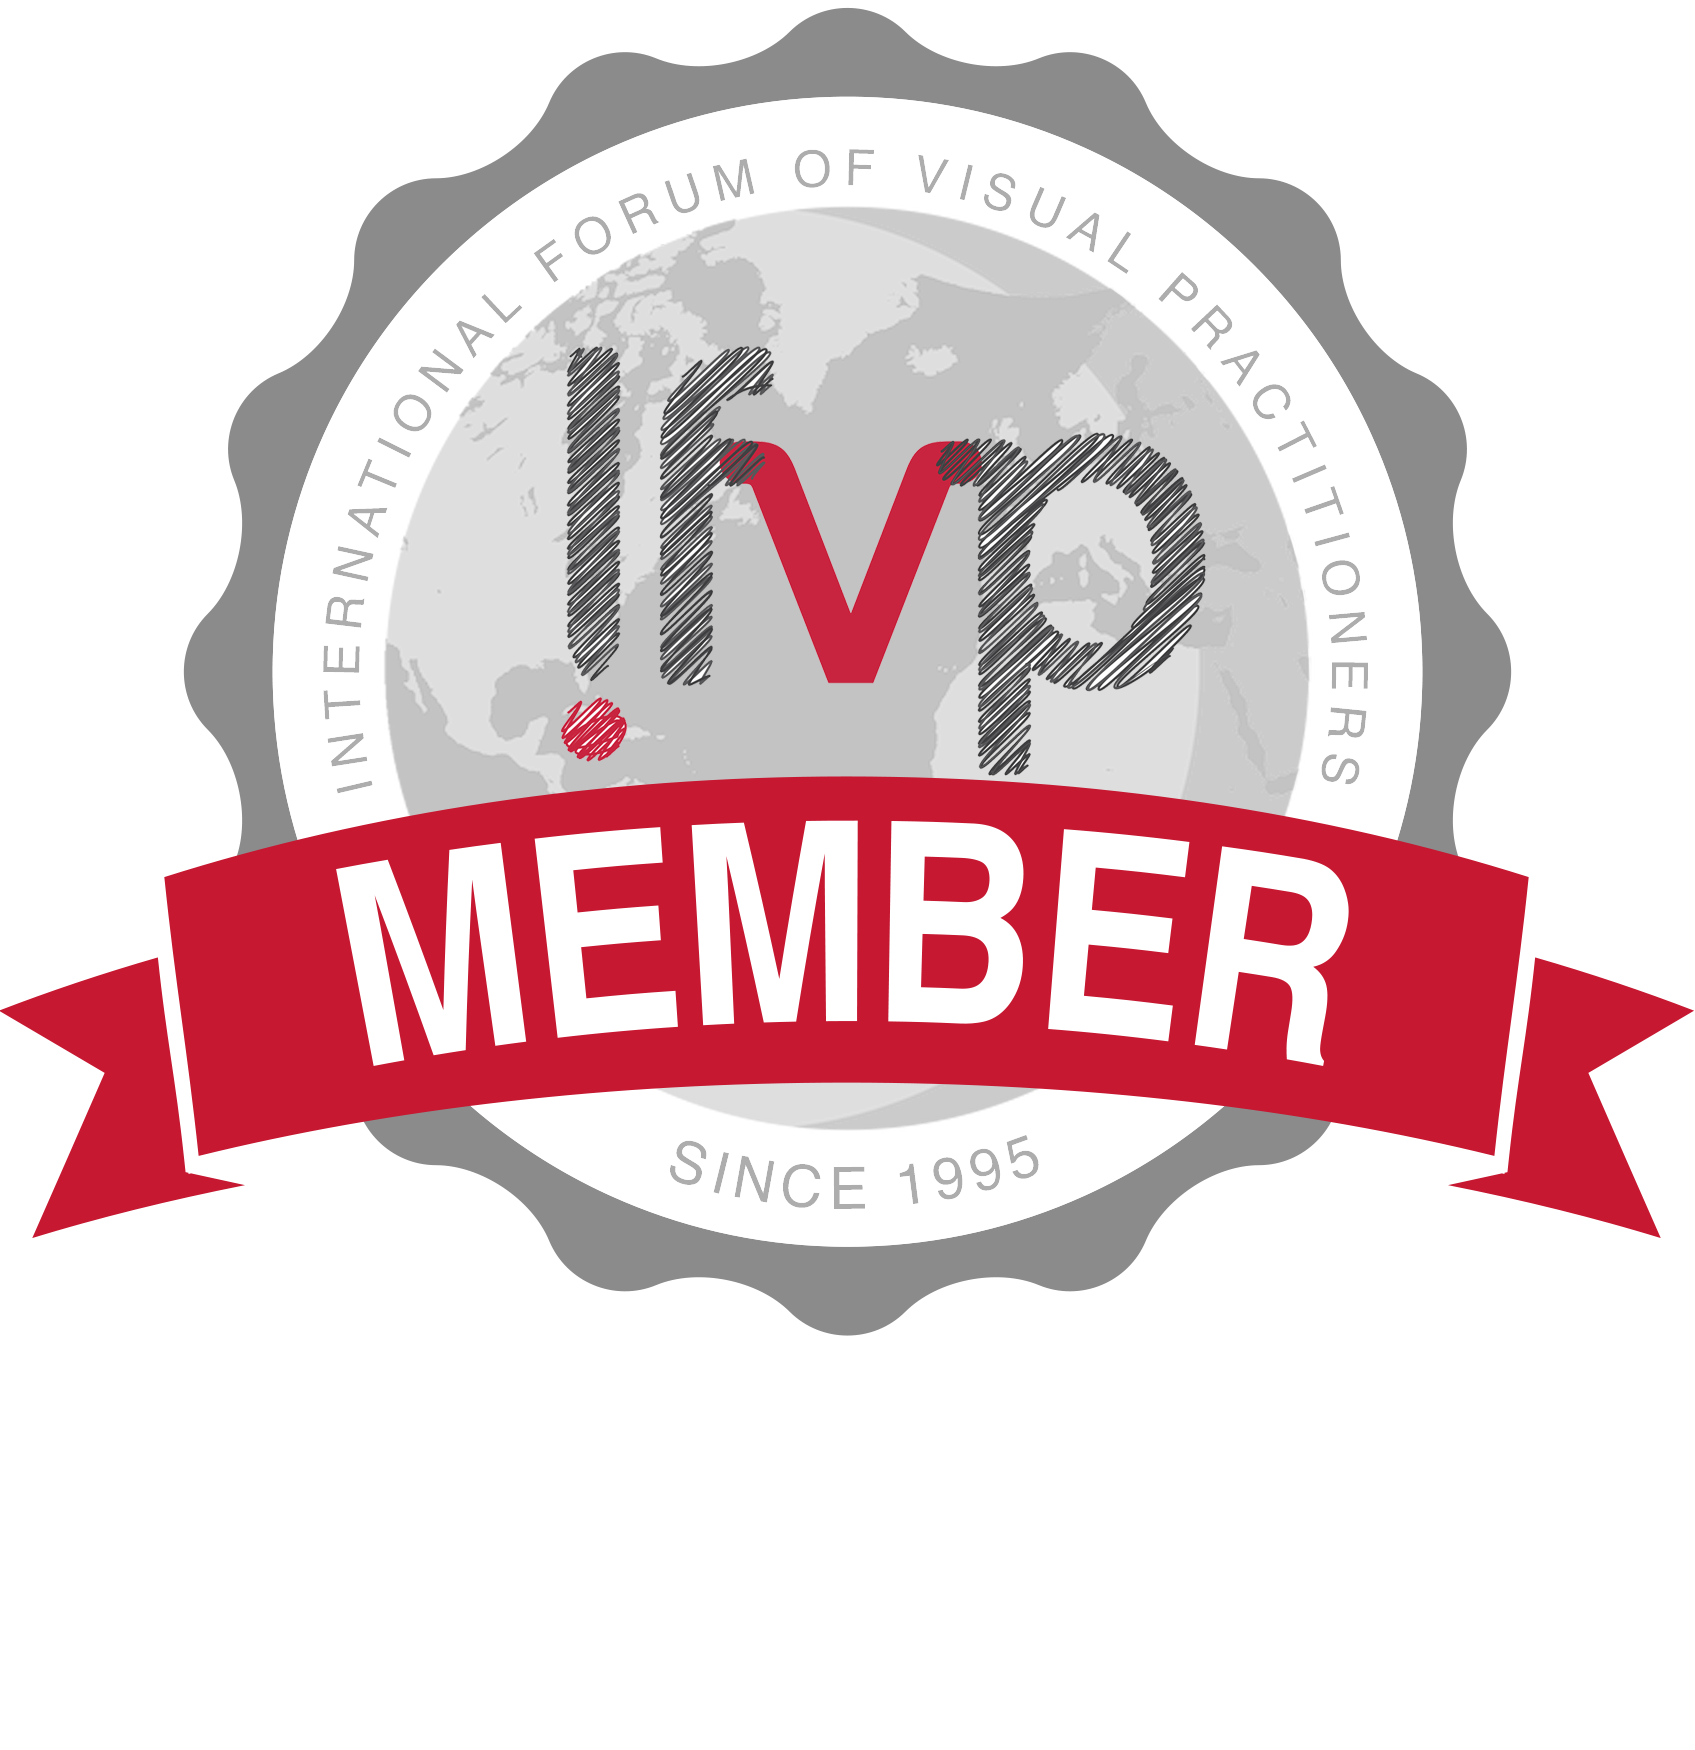 speakture is member of IFVP - International Forum of VIsual Practitioners